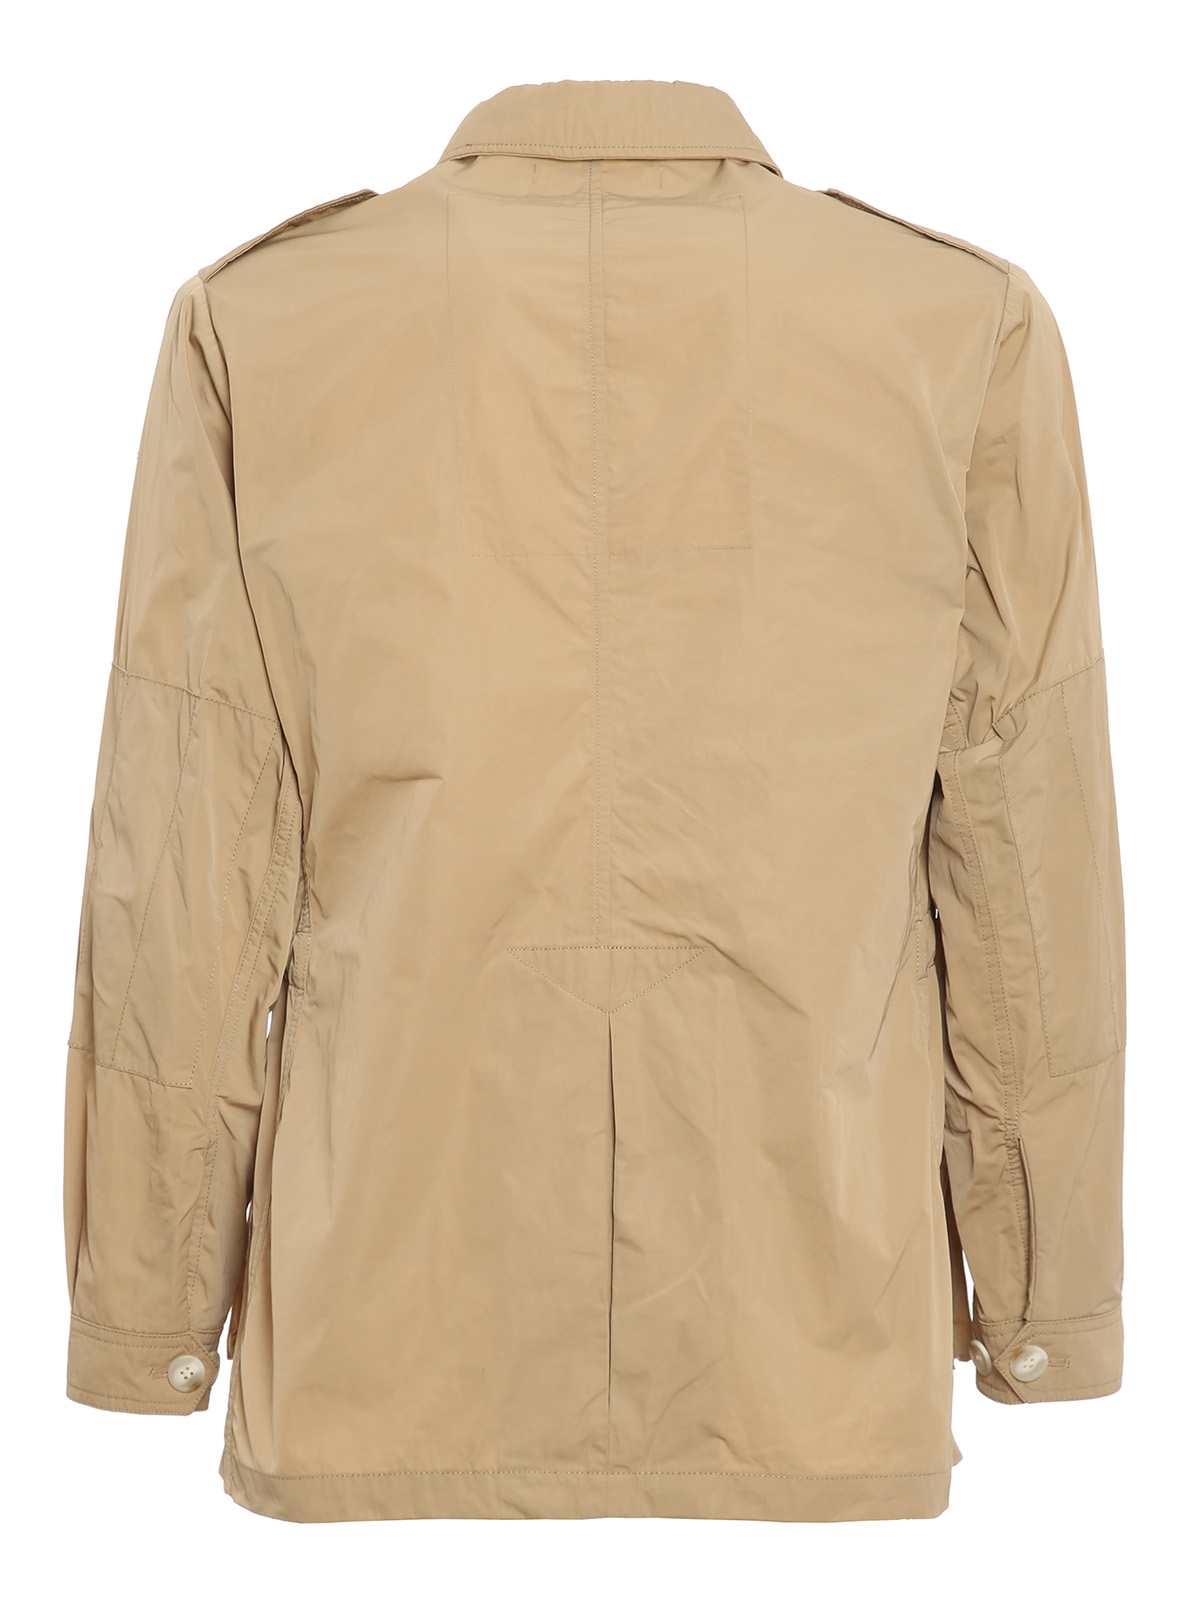 Casual jackets OOF Wear - Tech fabric jacket - SR0612 | iKRIX.com